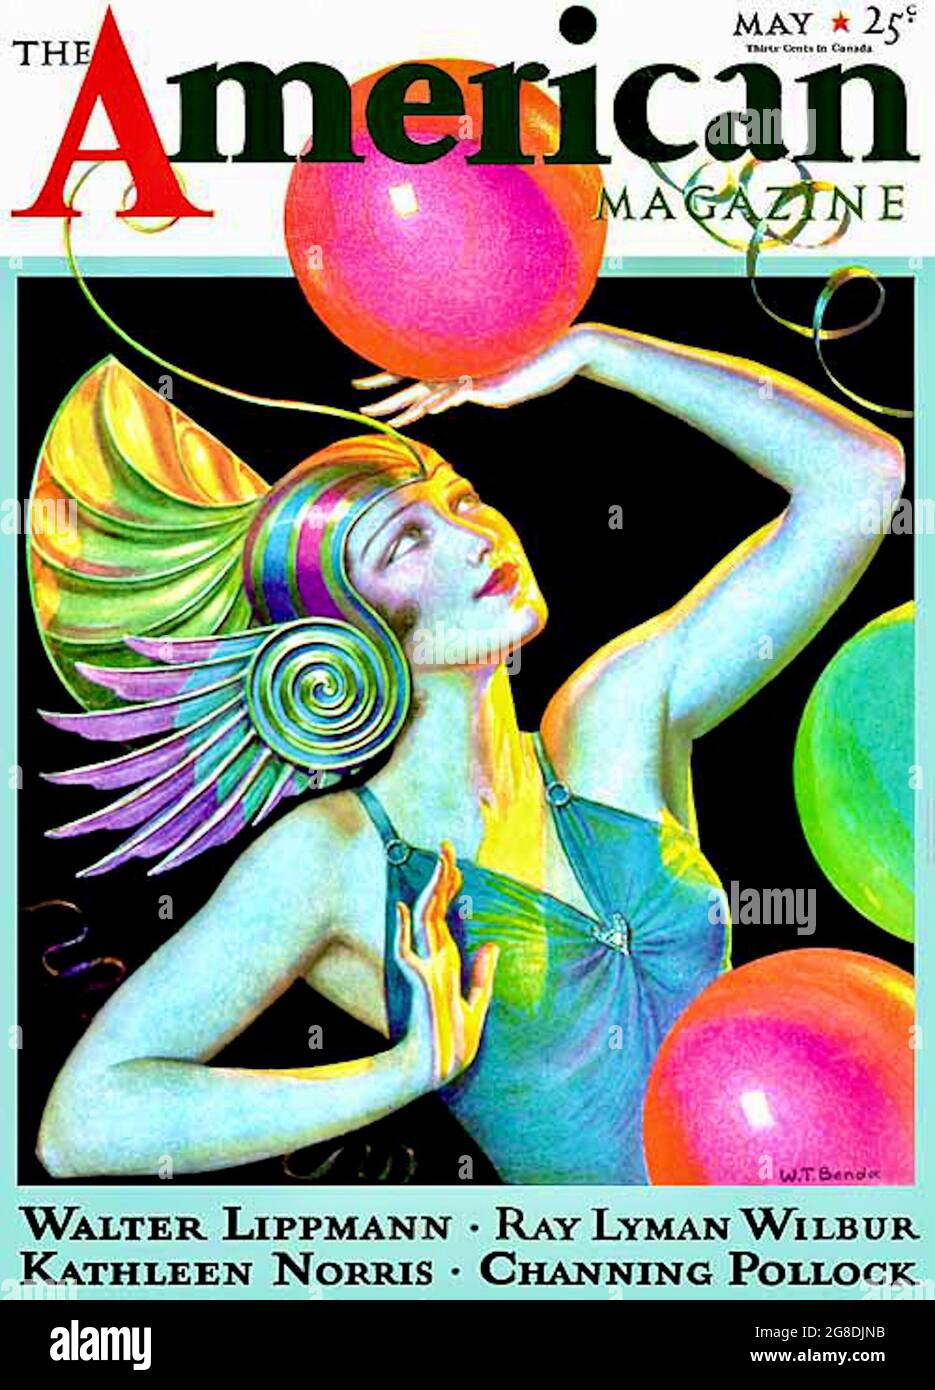 Władysław Teodor Benda (W.T. Benda) - the American Magazine cover design with showgirl and balloons. Stock Photo